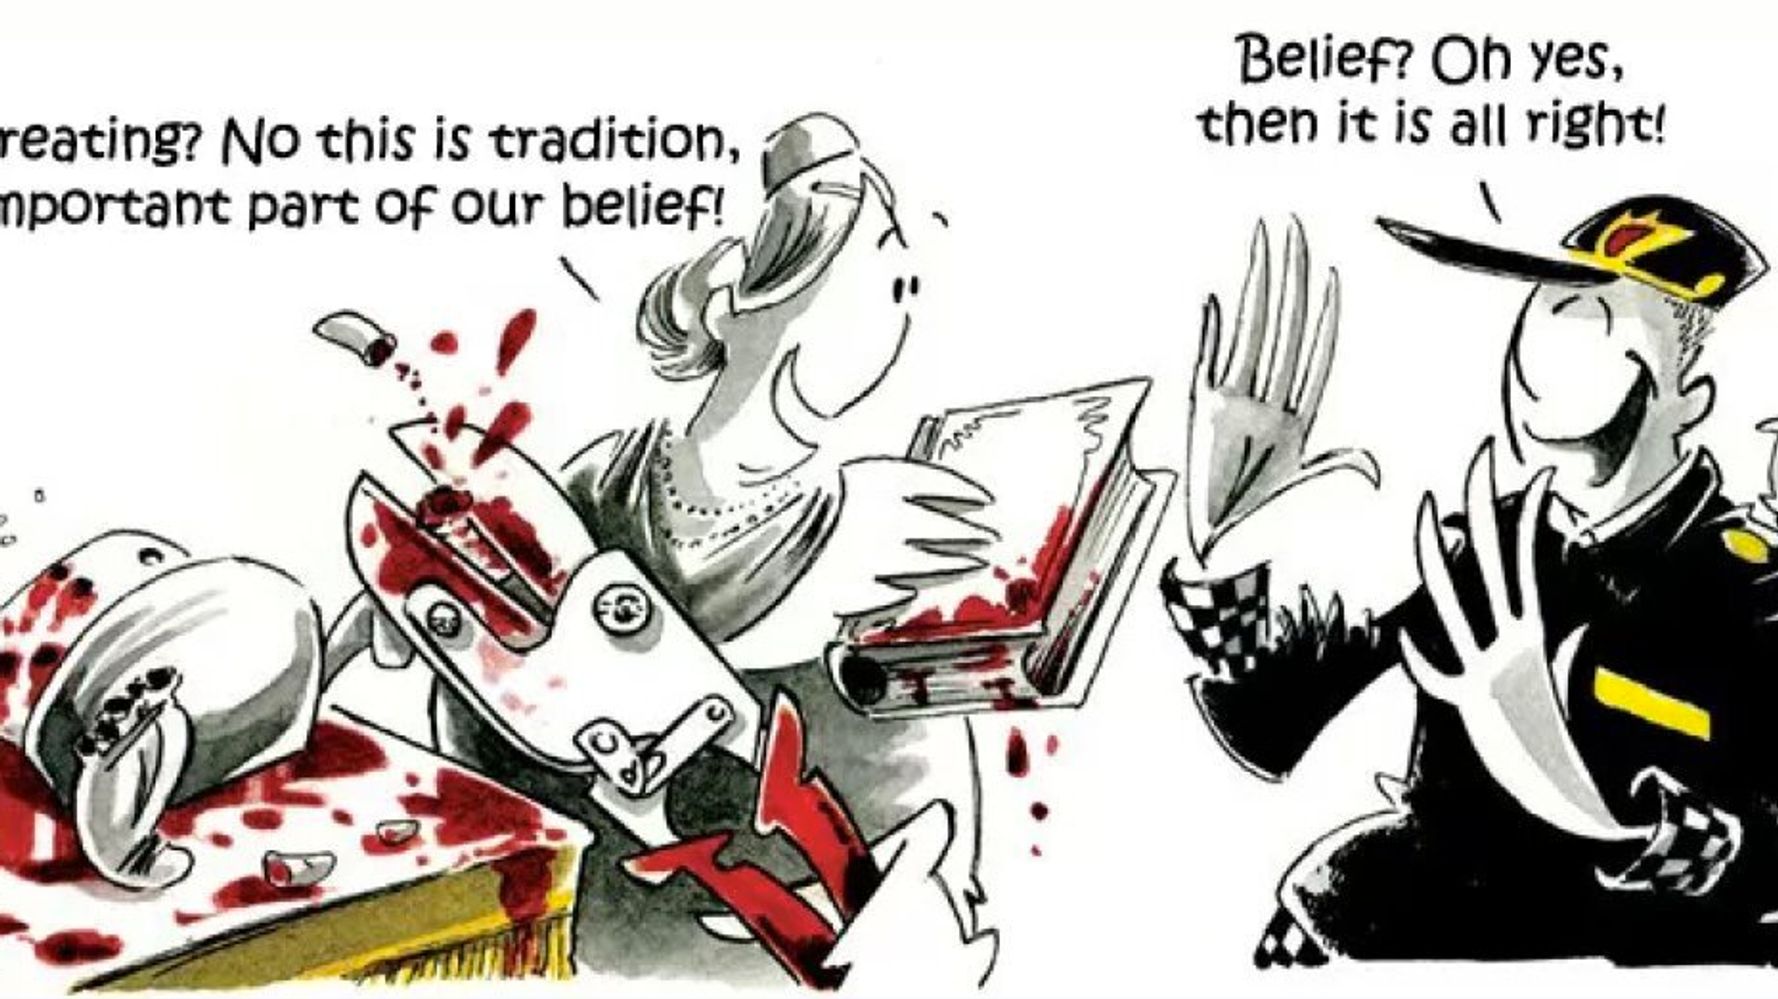 Circumcision Cartoon In Norwegian Newspaper Angers Jewish Groups | HuffPost  UK News